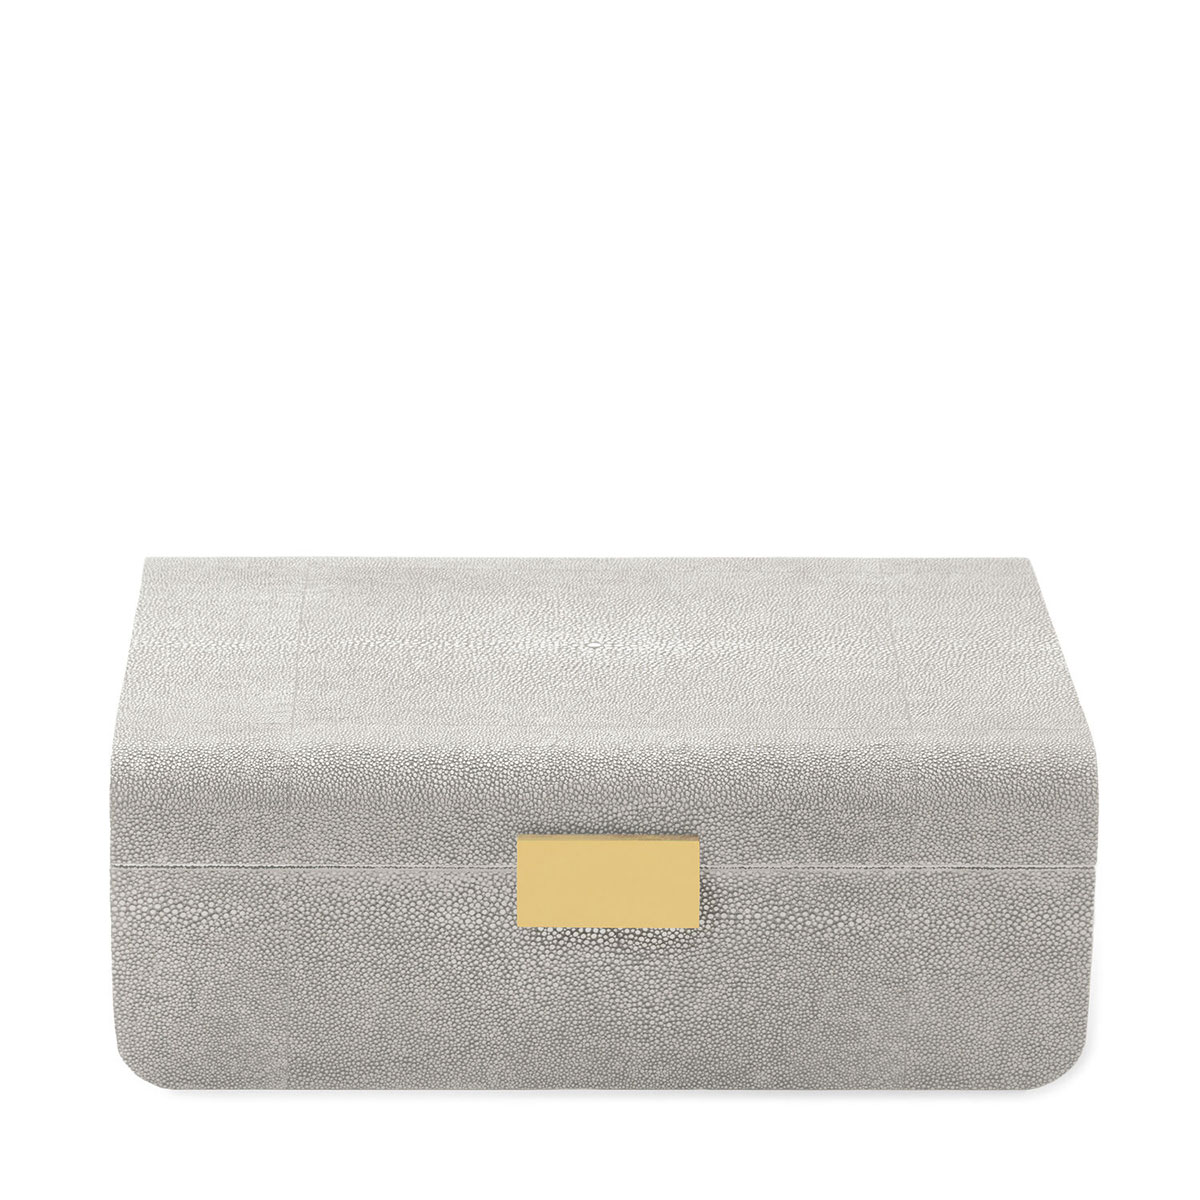 Aerin Modern Shagreen Small Jewelry Box, Dove